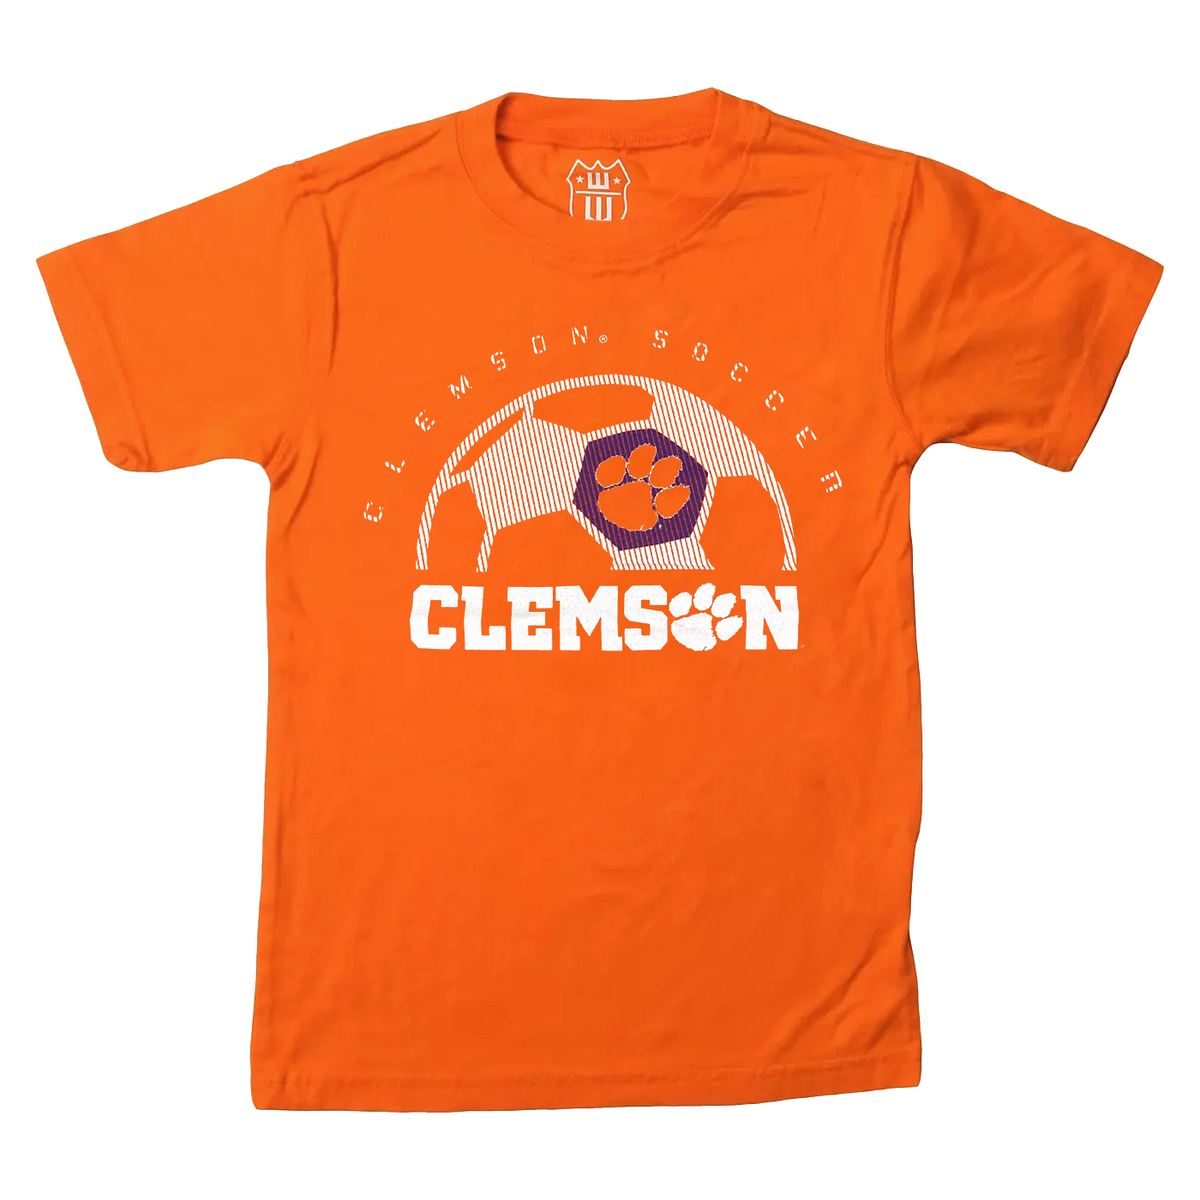 Youth Clemson Orange Short Sleeve Jersey Tee with Soccer Design